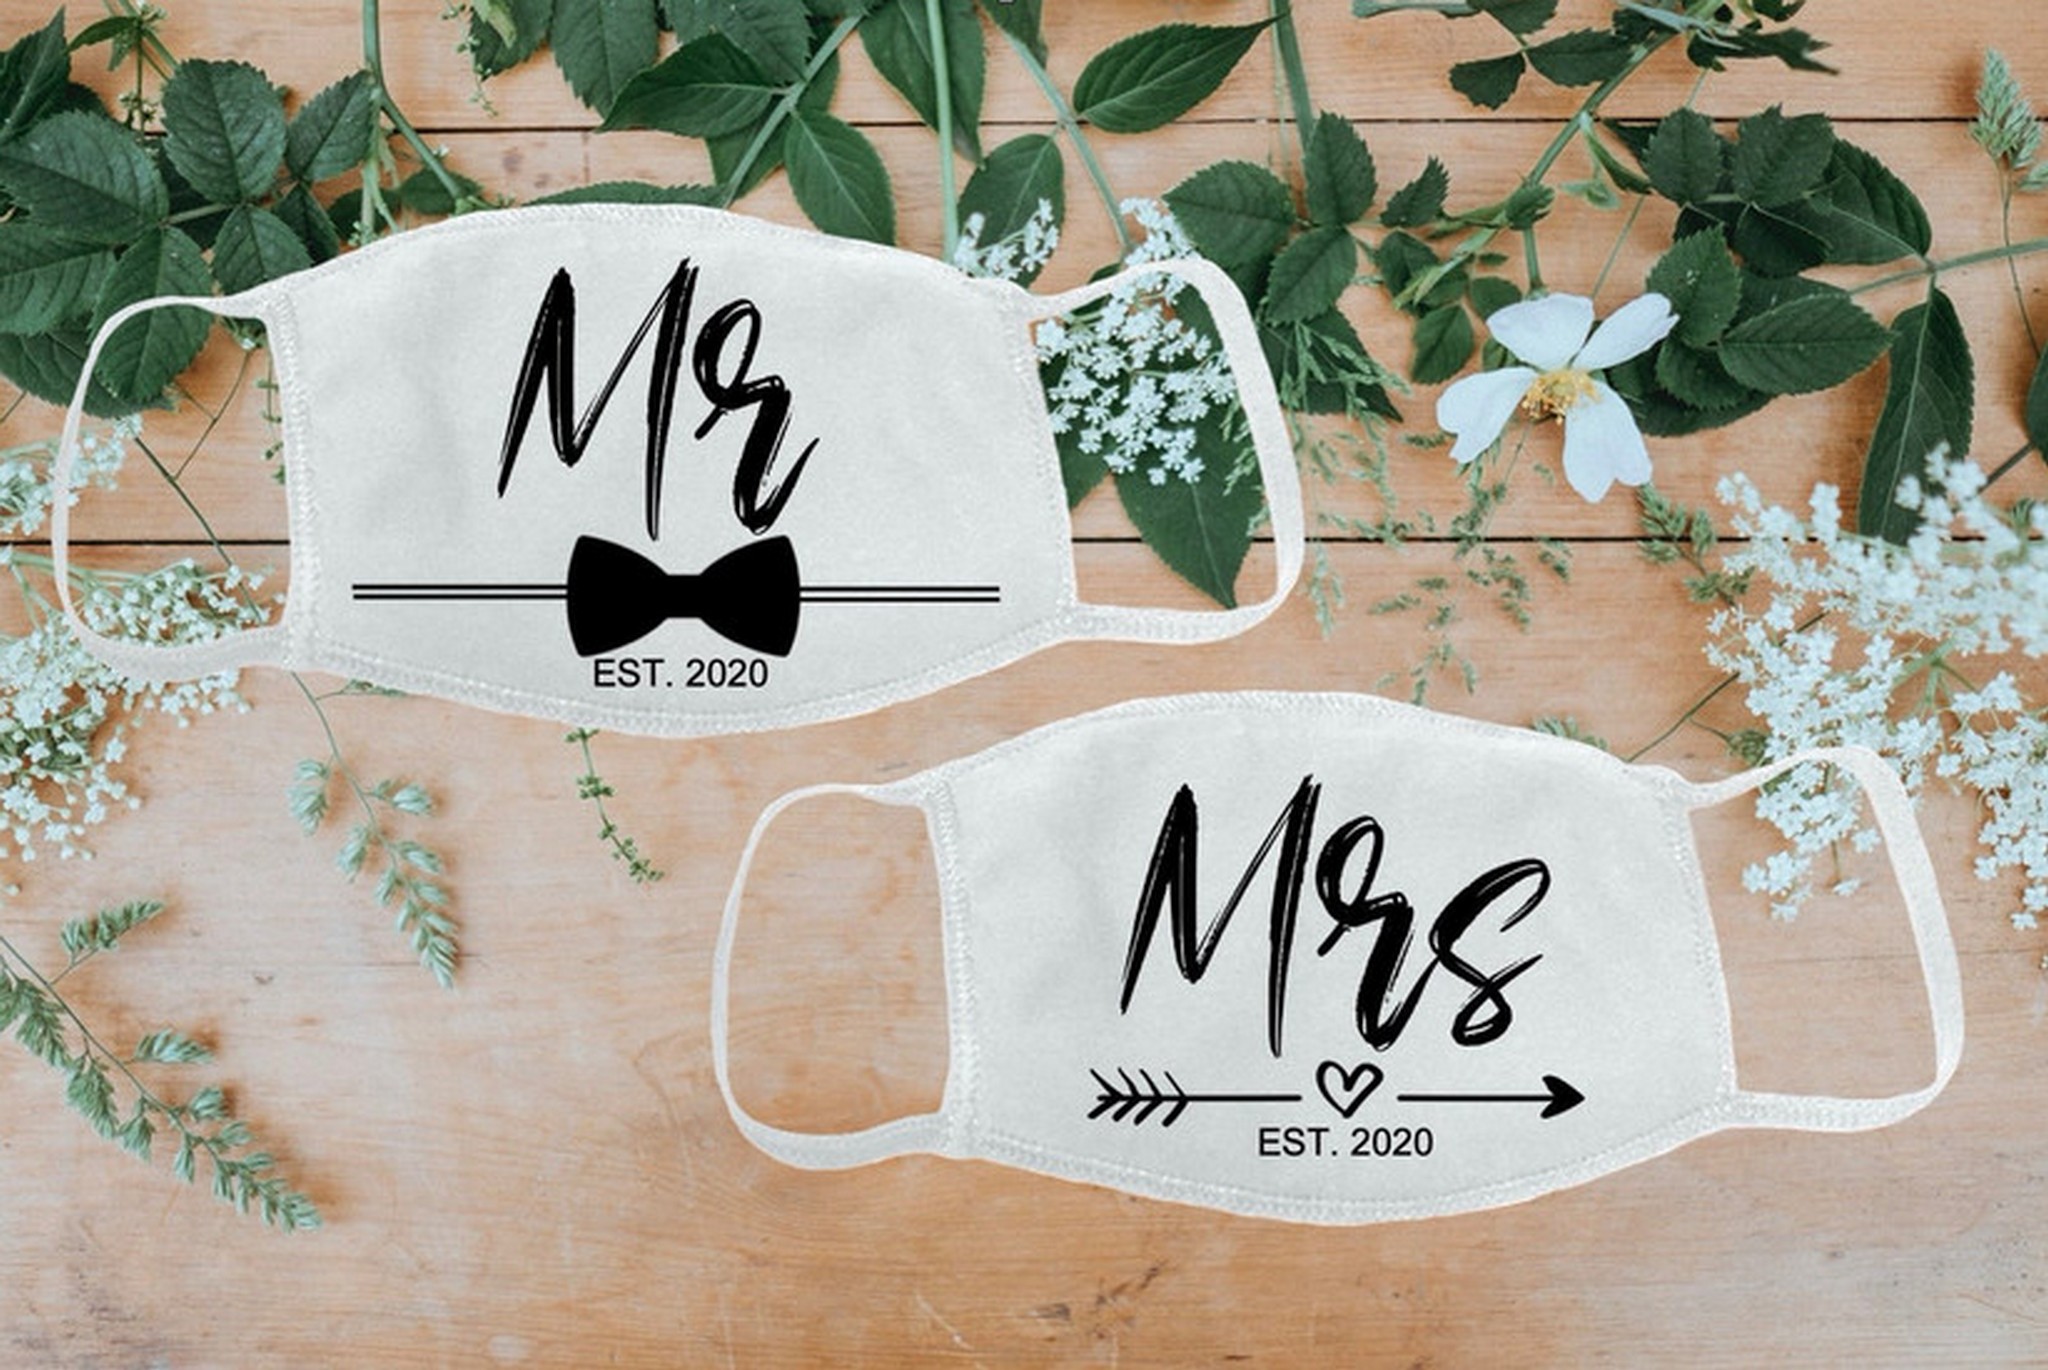 Mr and Mrs masks